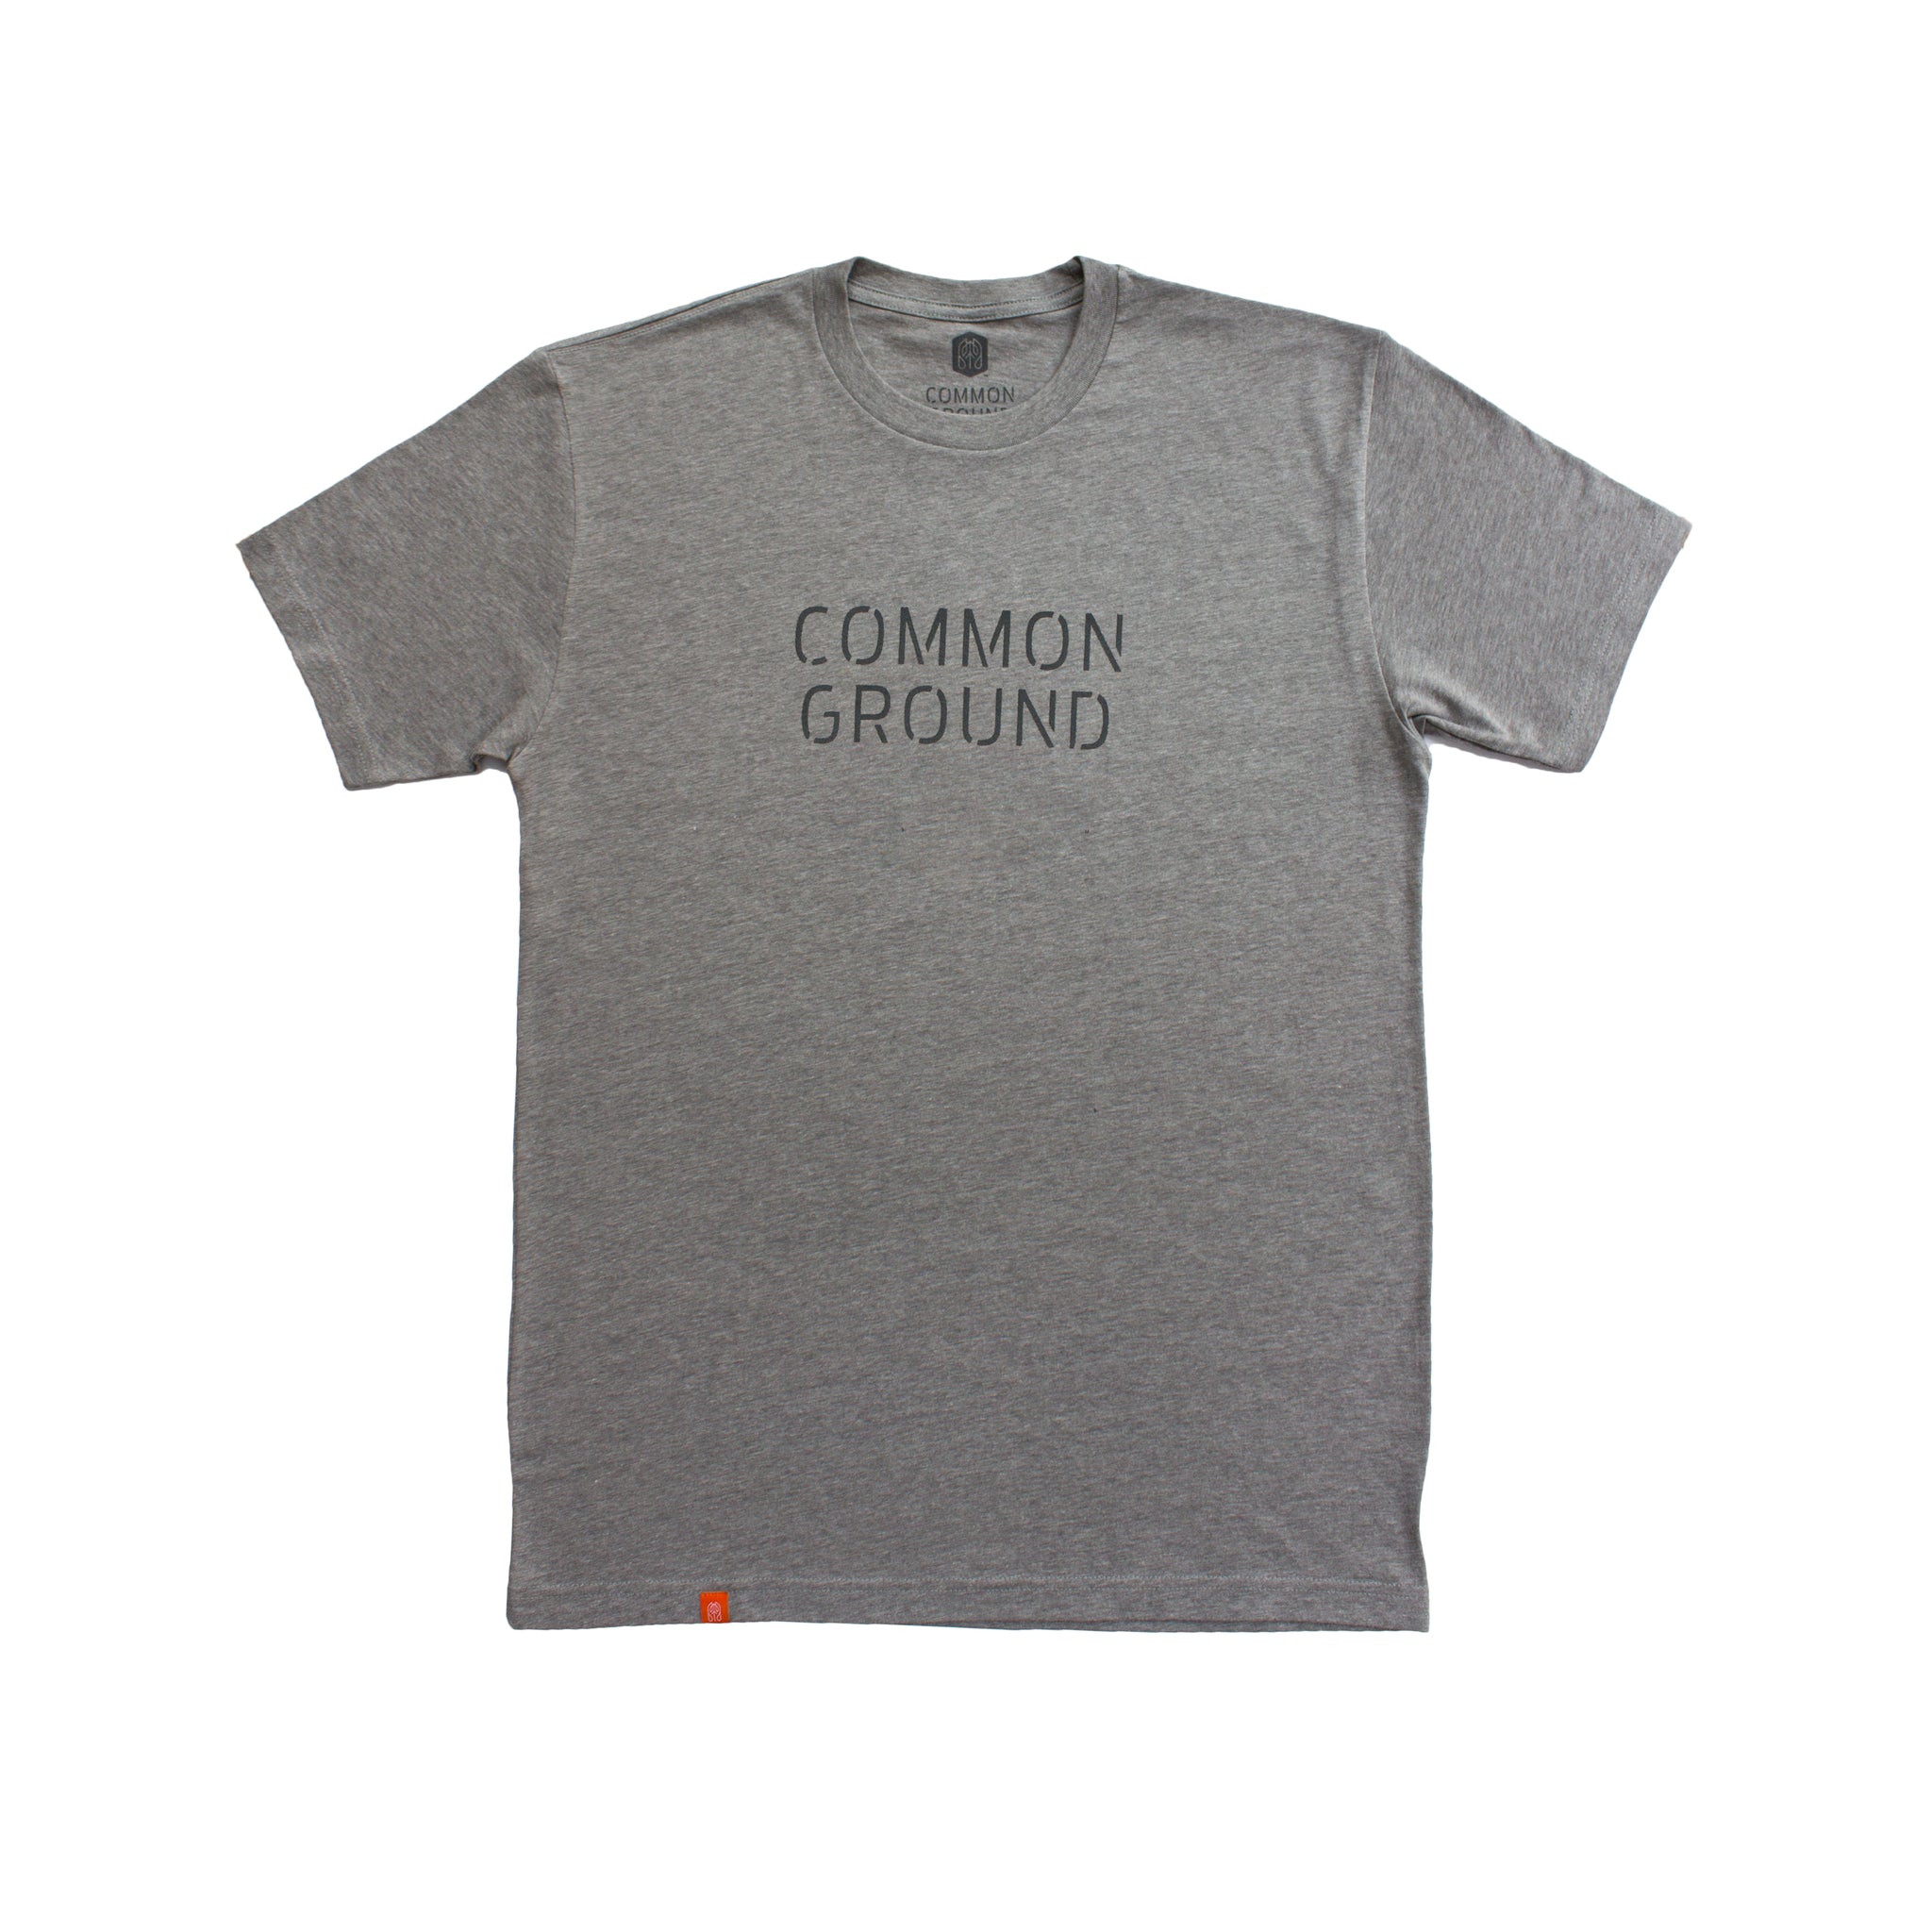 Dark_Heather_Gray - Common Ground T shirt Front View